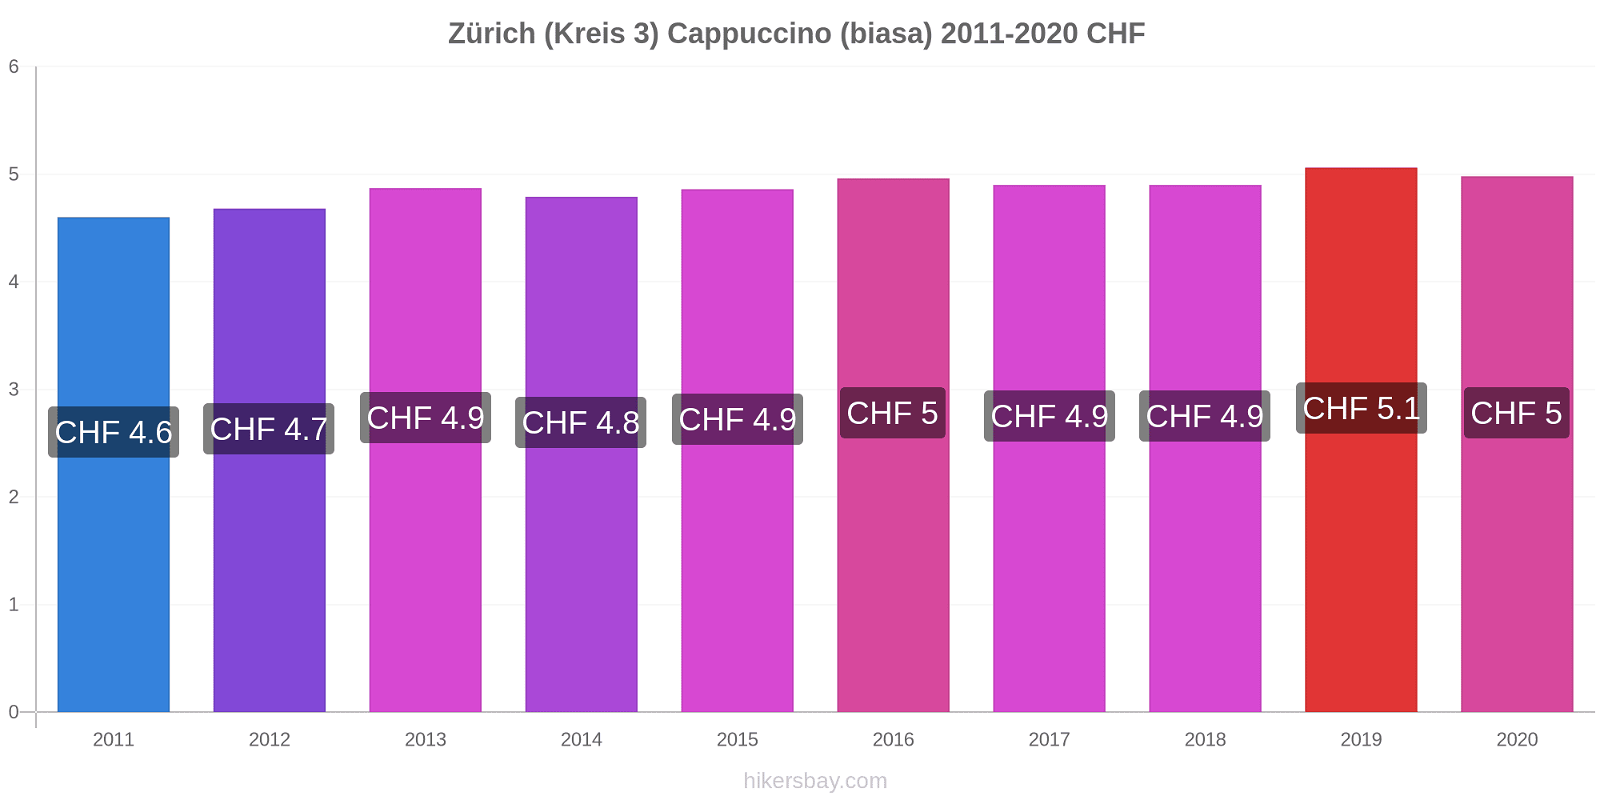 Zürich (Kreis 3) perubahan harga Cappuccino (biasa) hikersbay.com